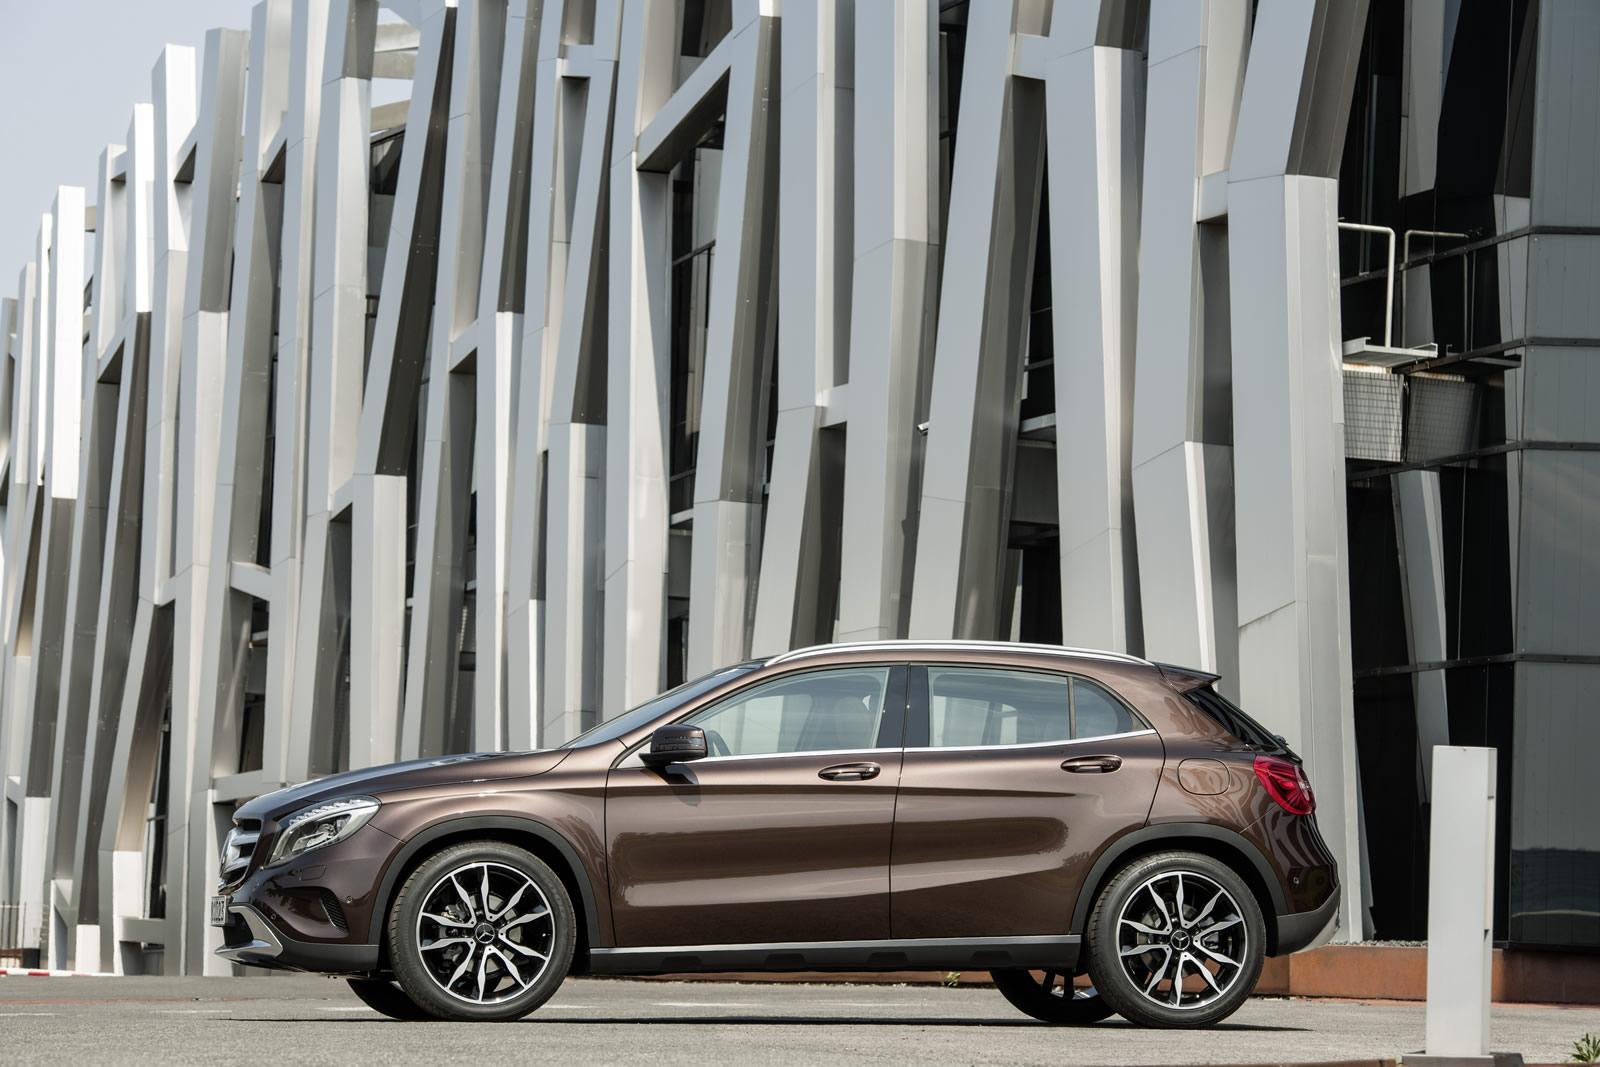 2015 Mercedes-Benz GLA-Class Images and details unveiled | Sense ...